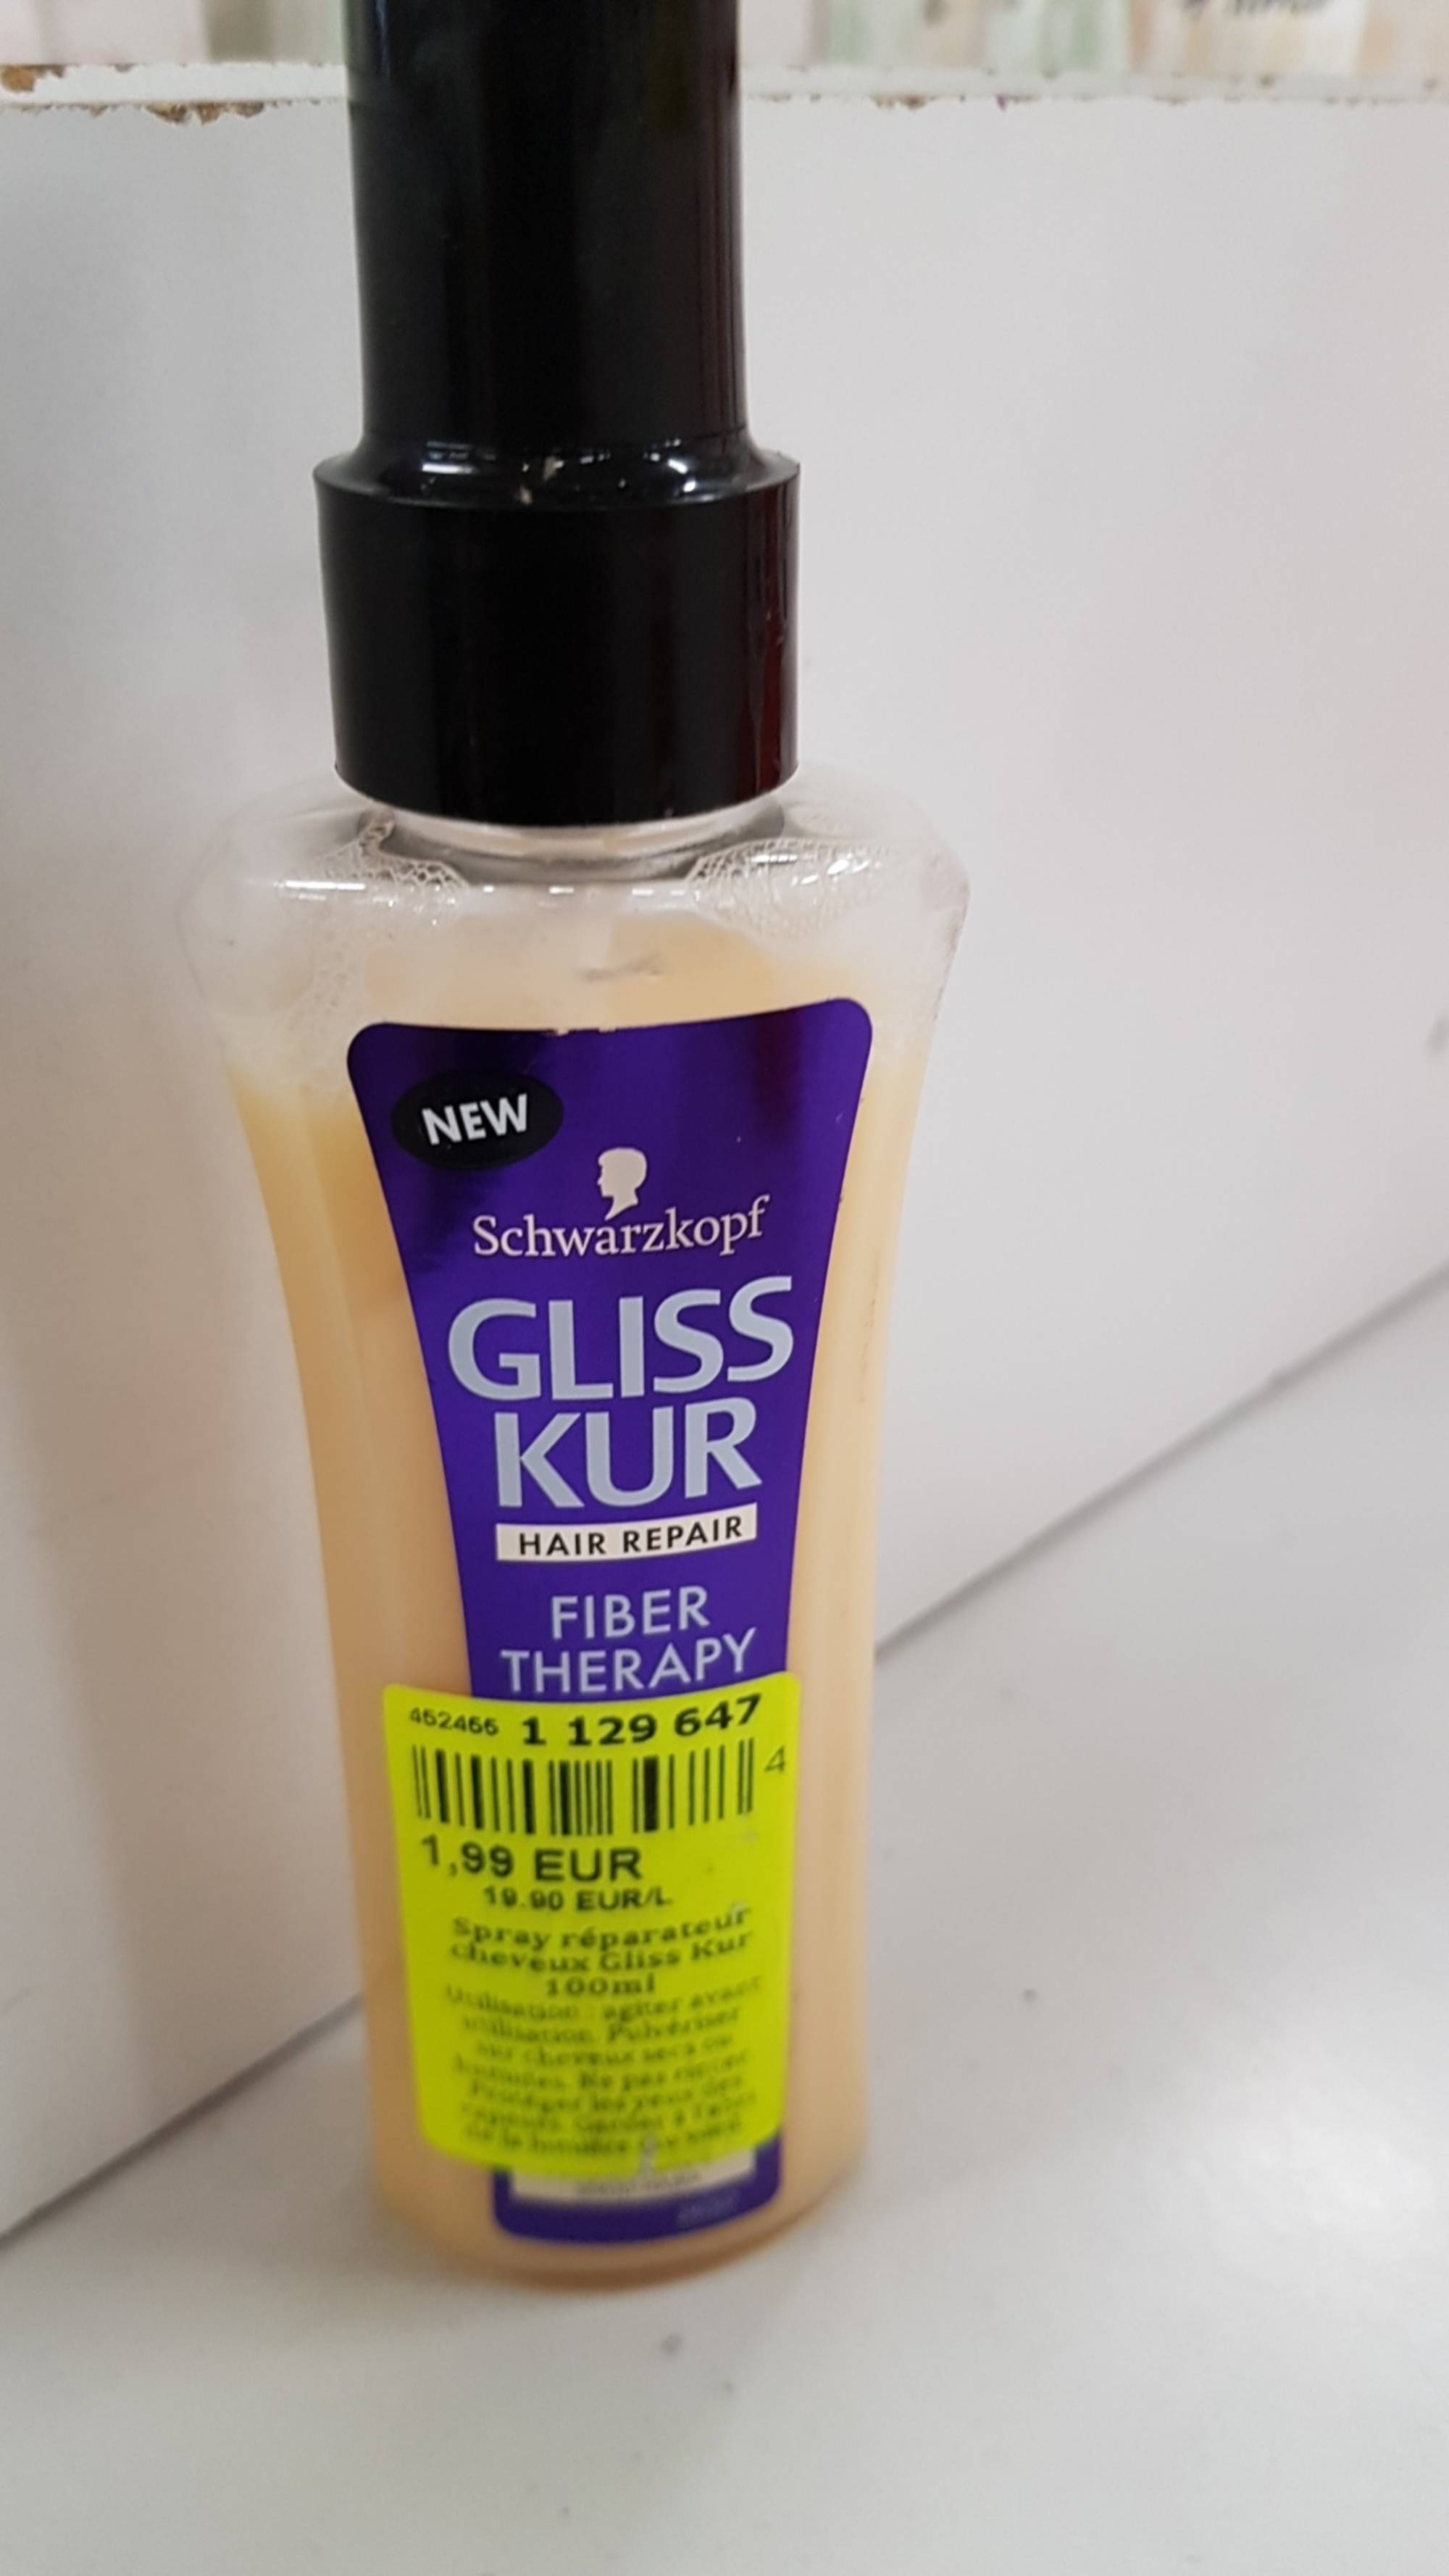 SCHWARZKOPF - Gliss kur hair repair - Fiber therapy